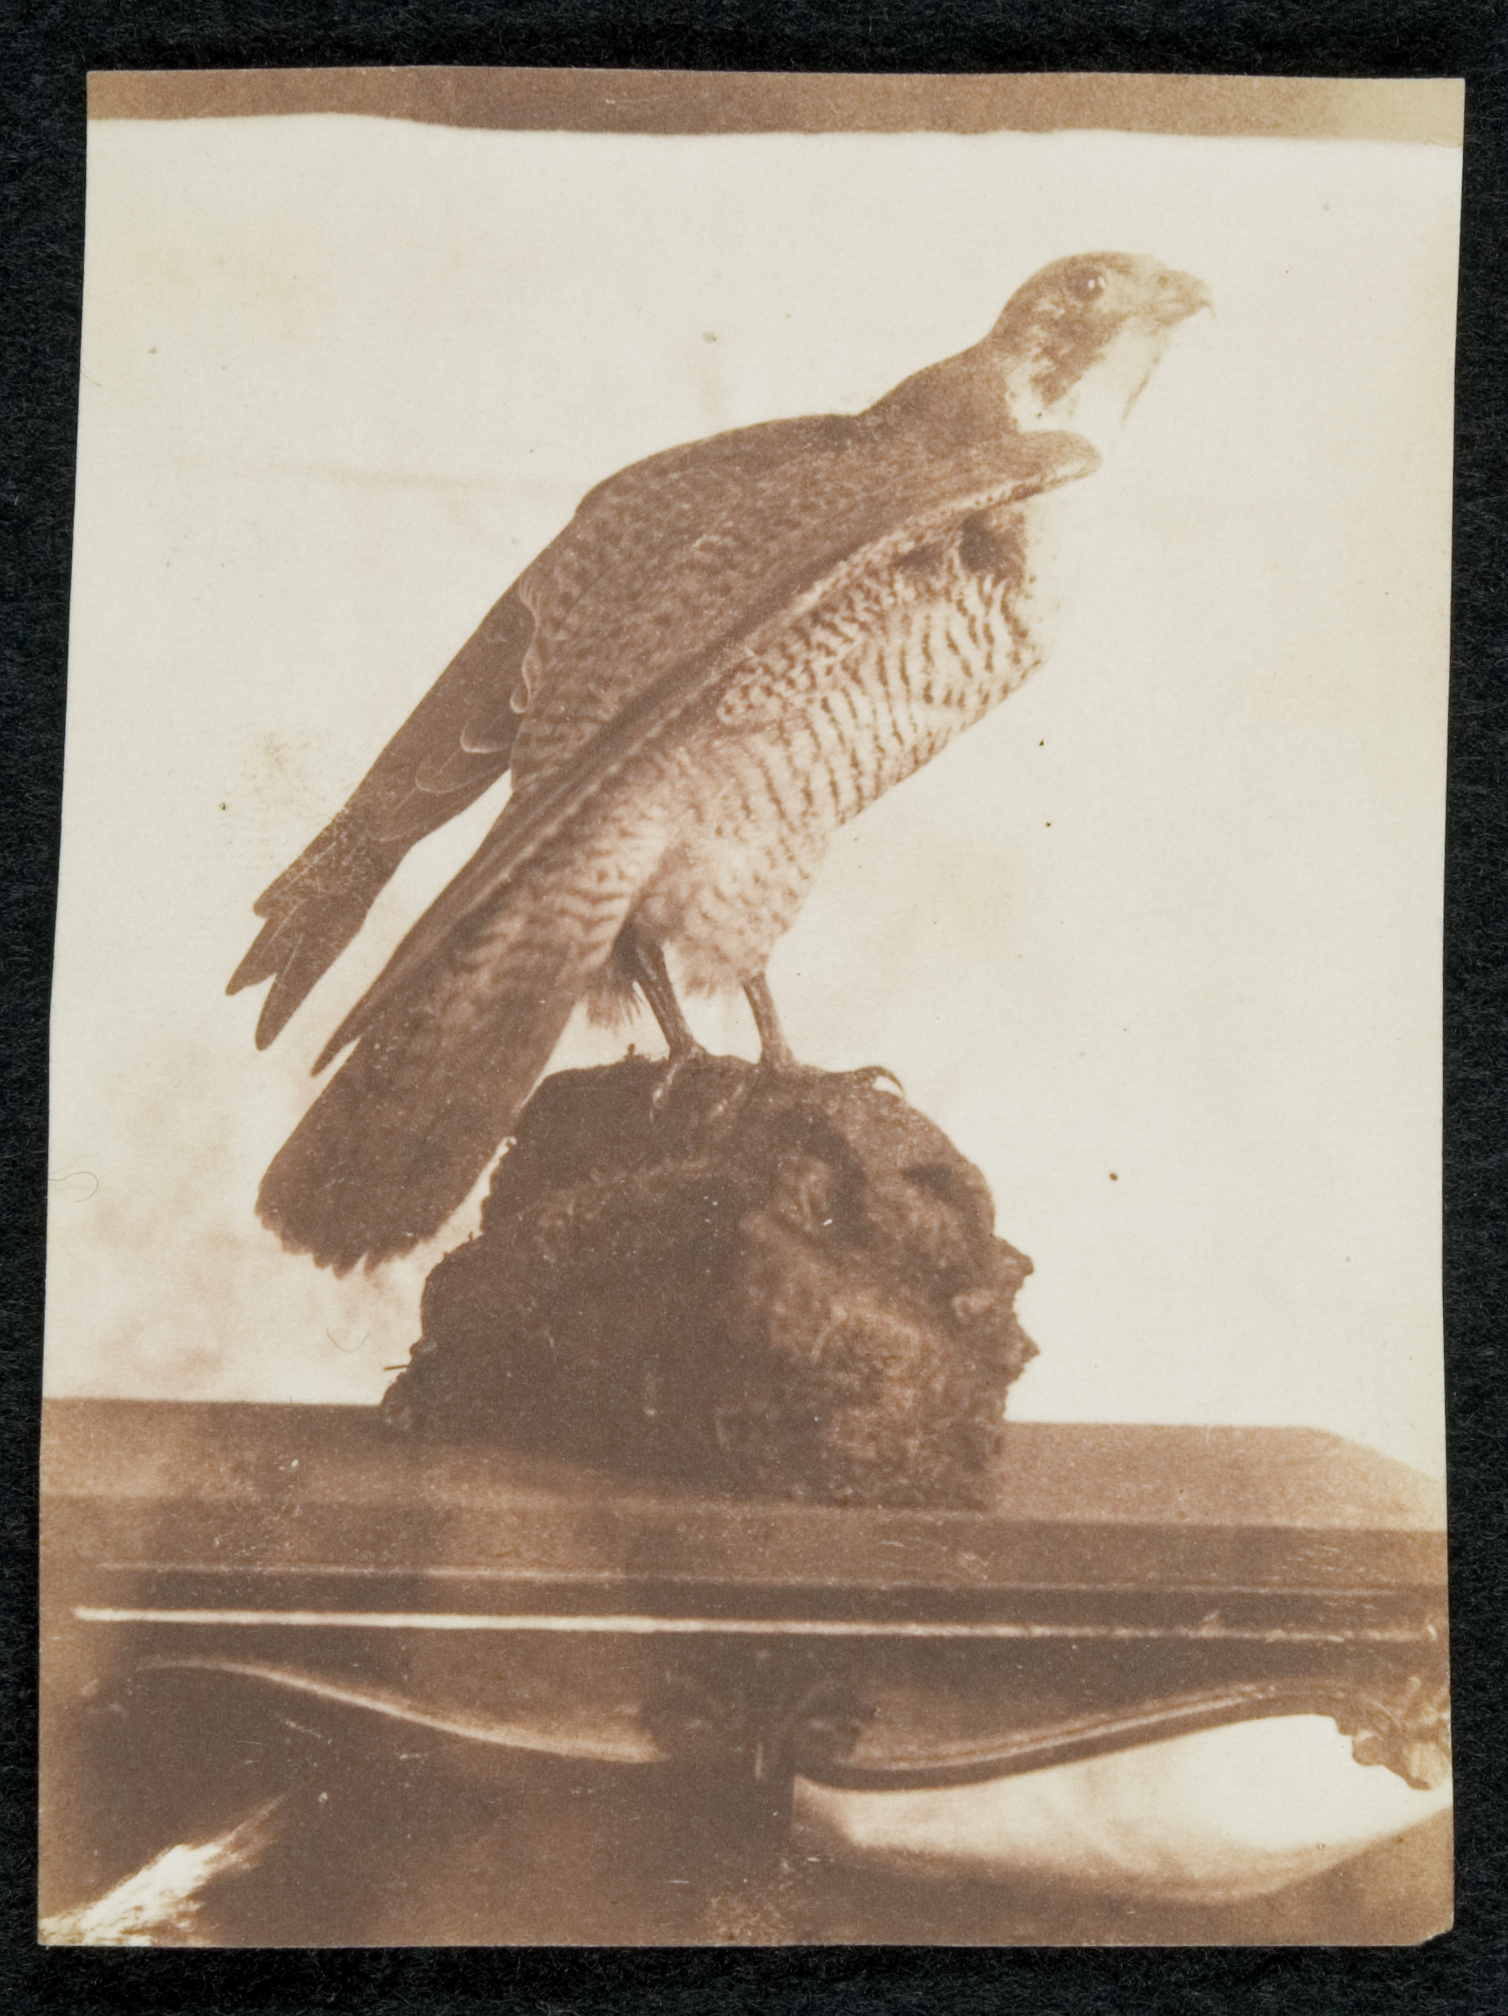 Stuffed hawk on table, photograph